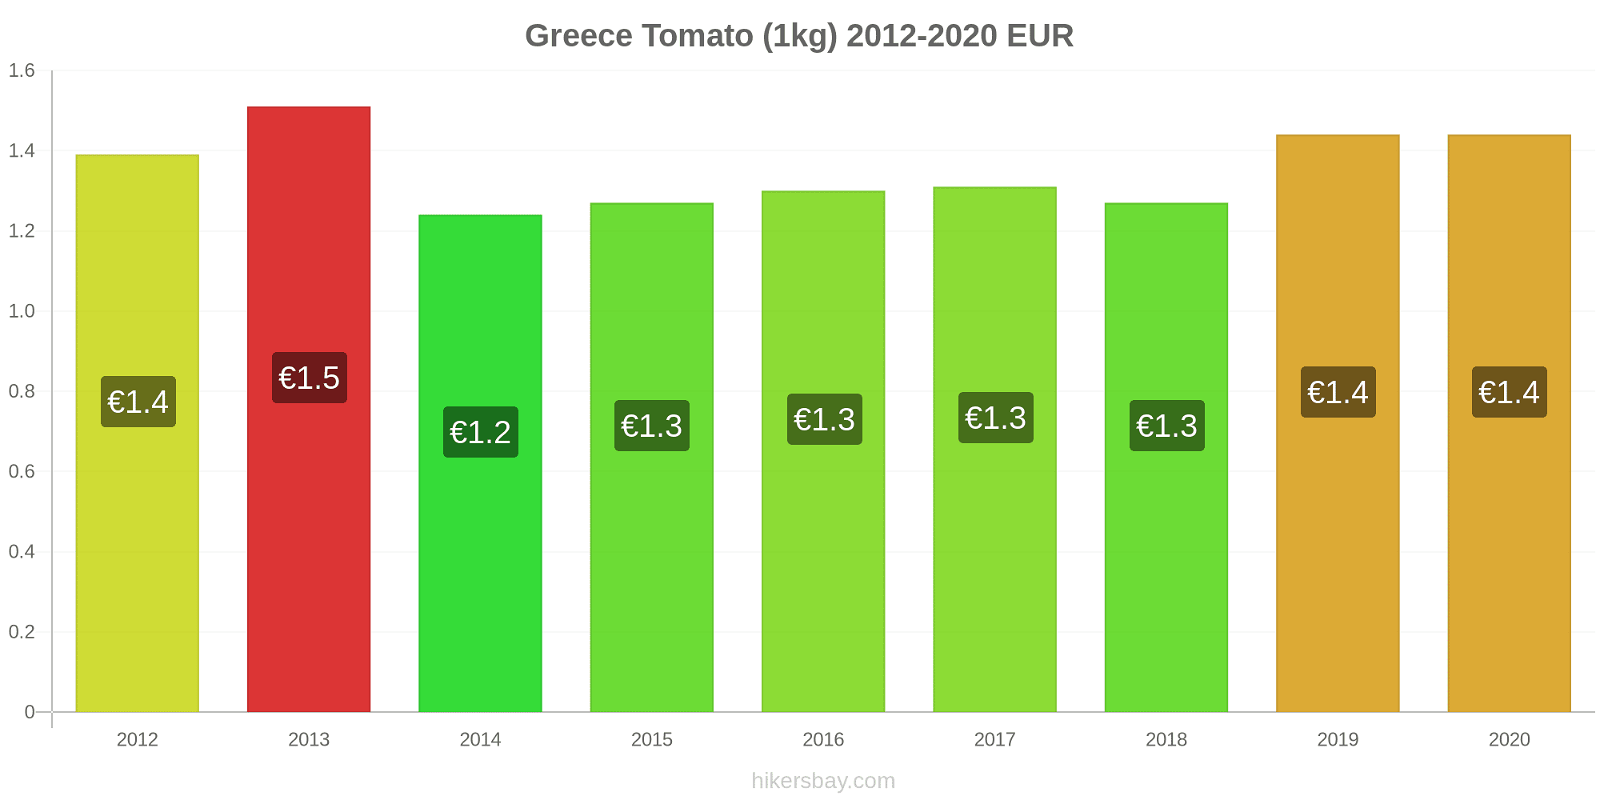 Greece price changes Tomato (1kg) hikersbay.com